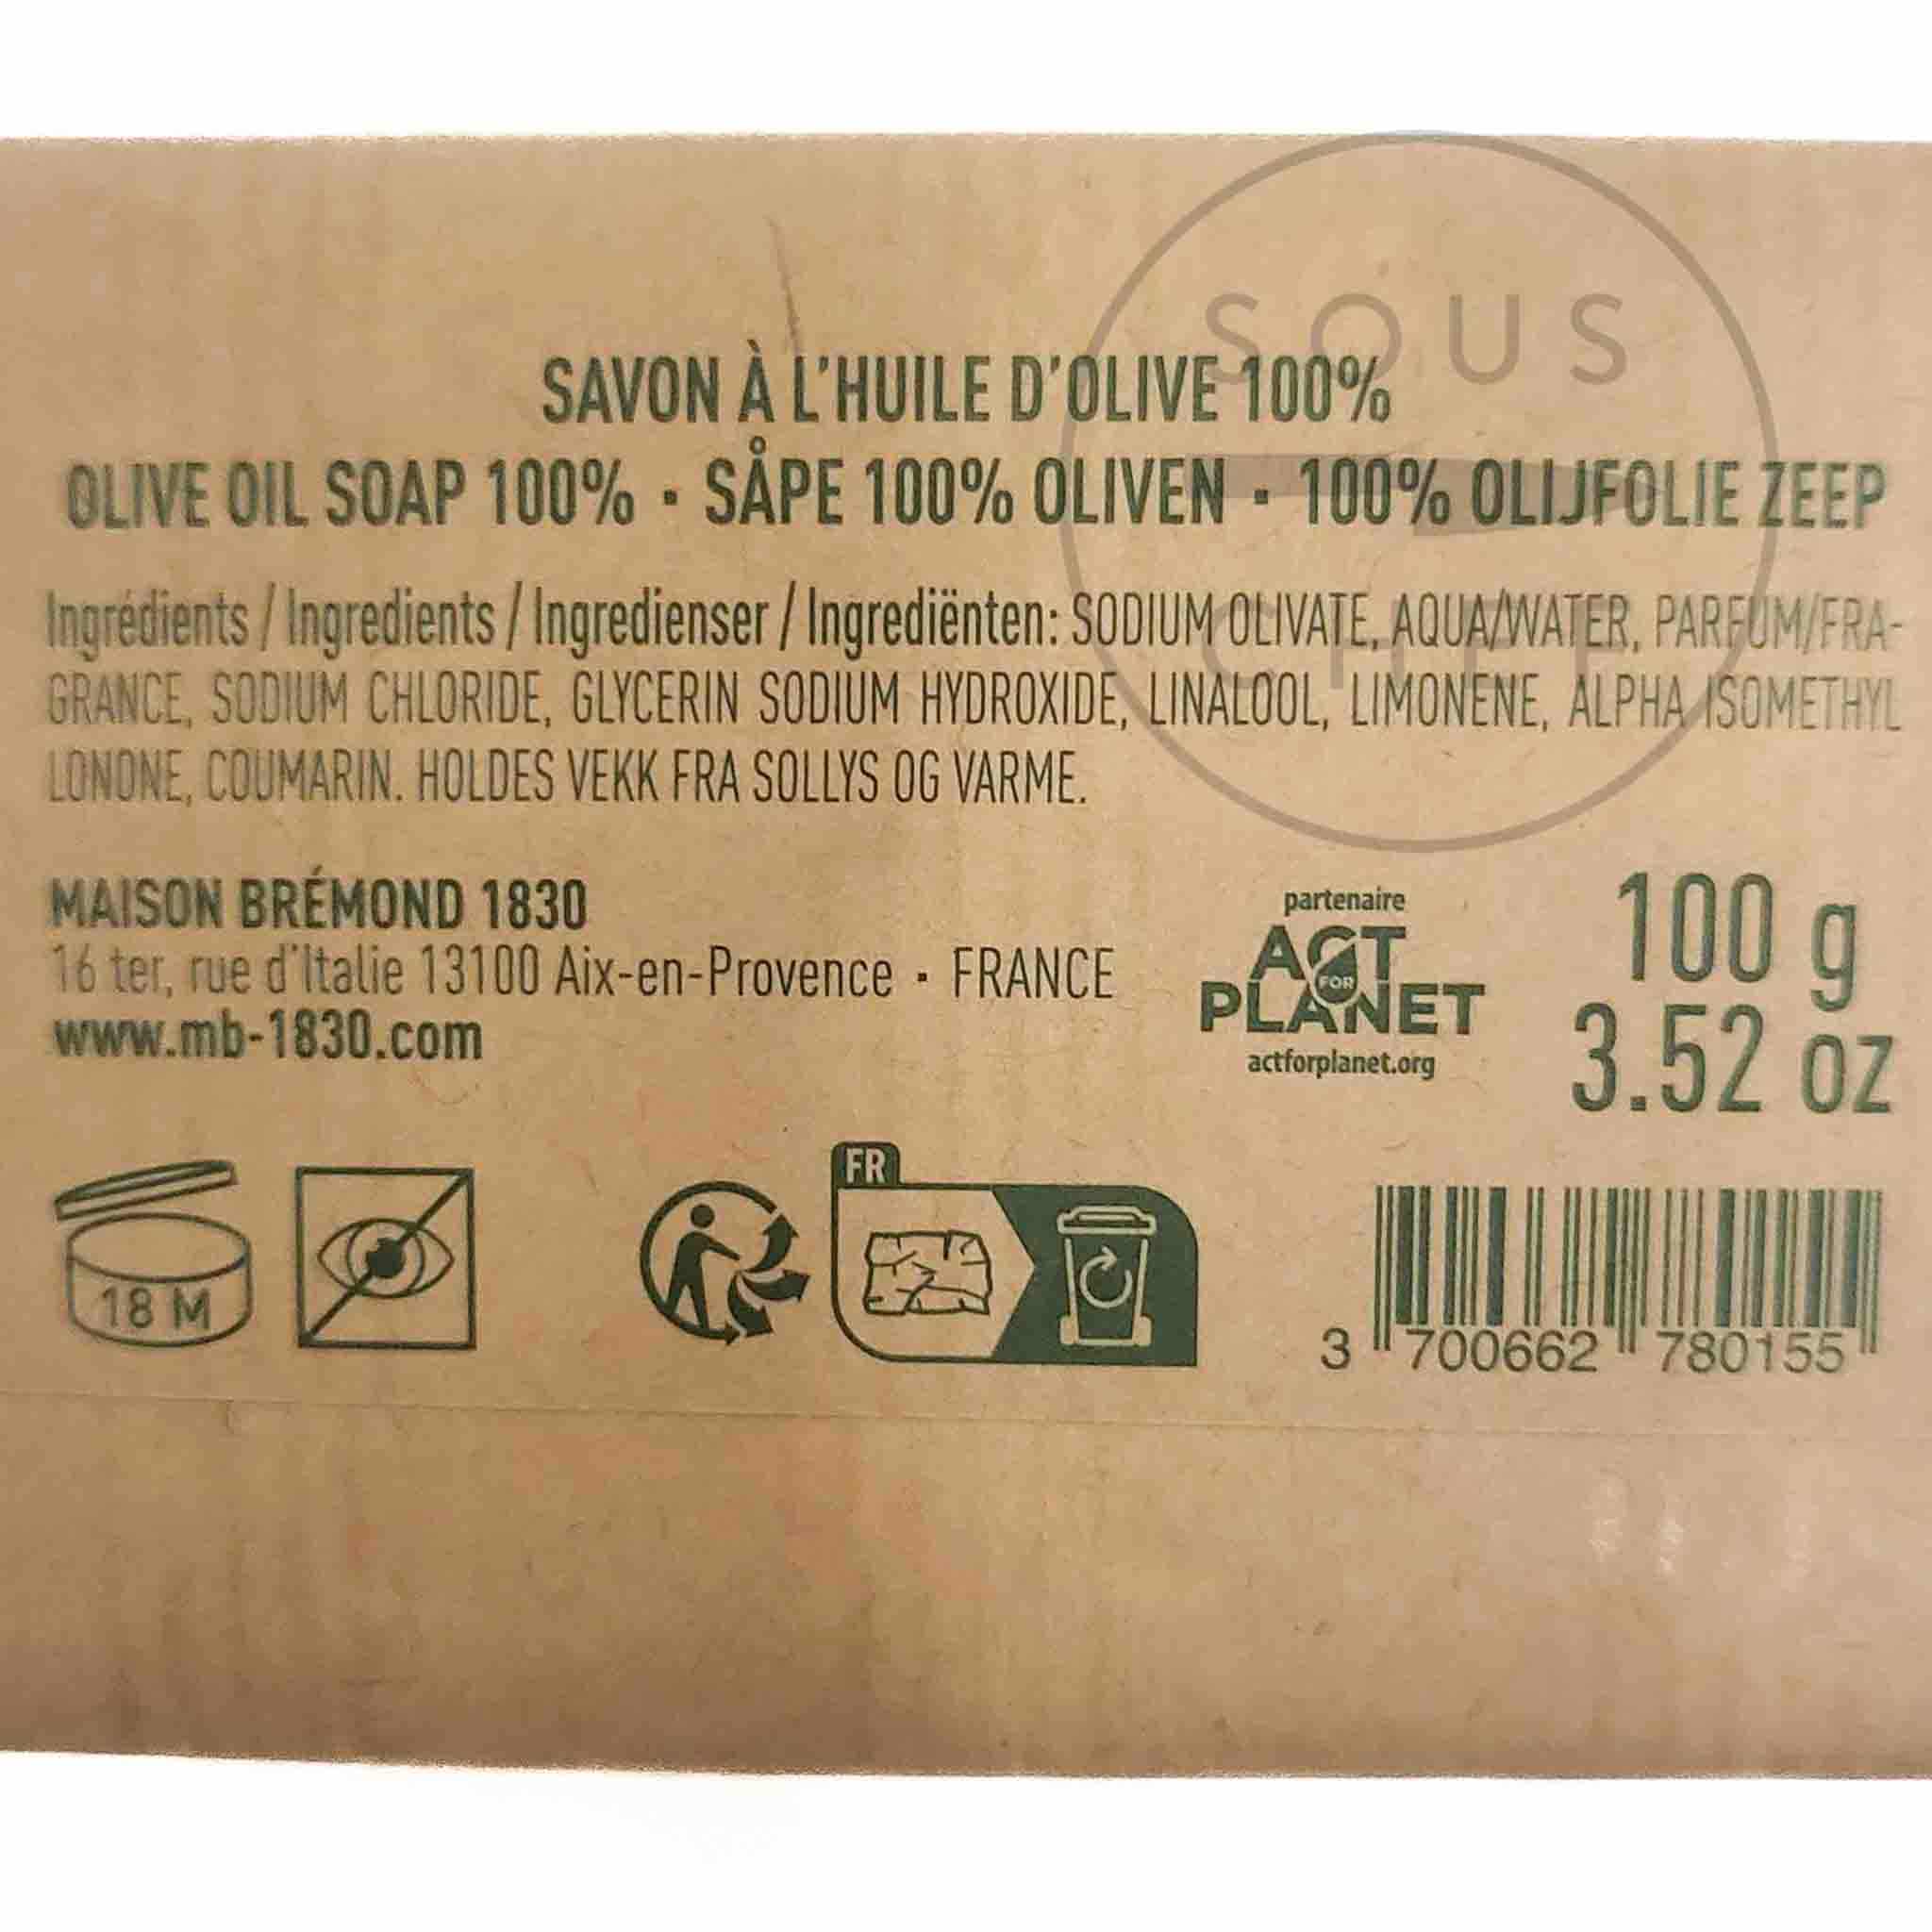 Maison Bremond Olive Oil Soap, 100g